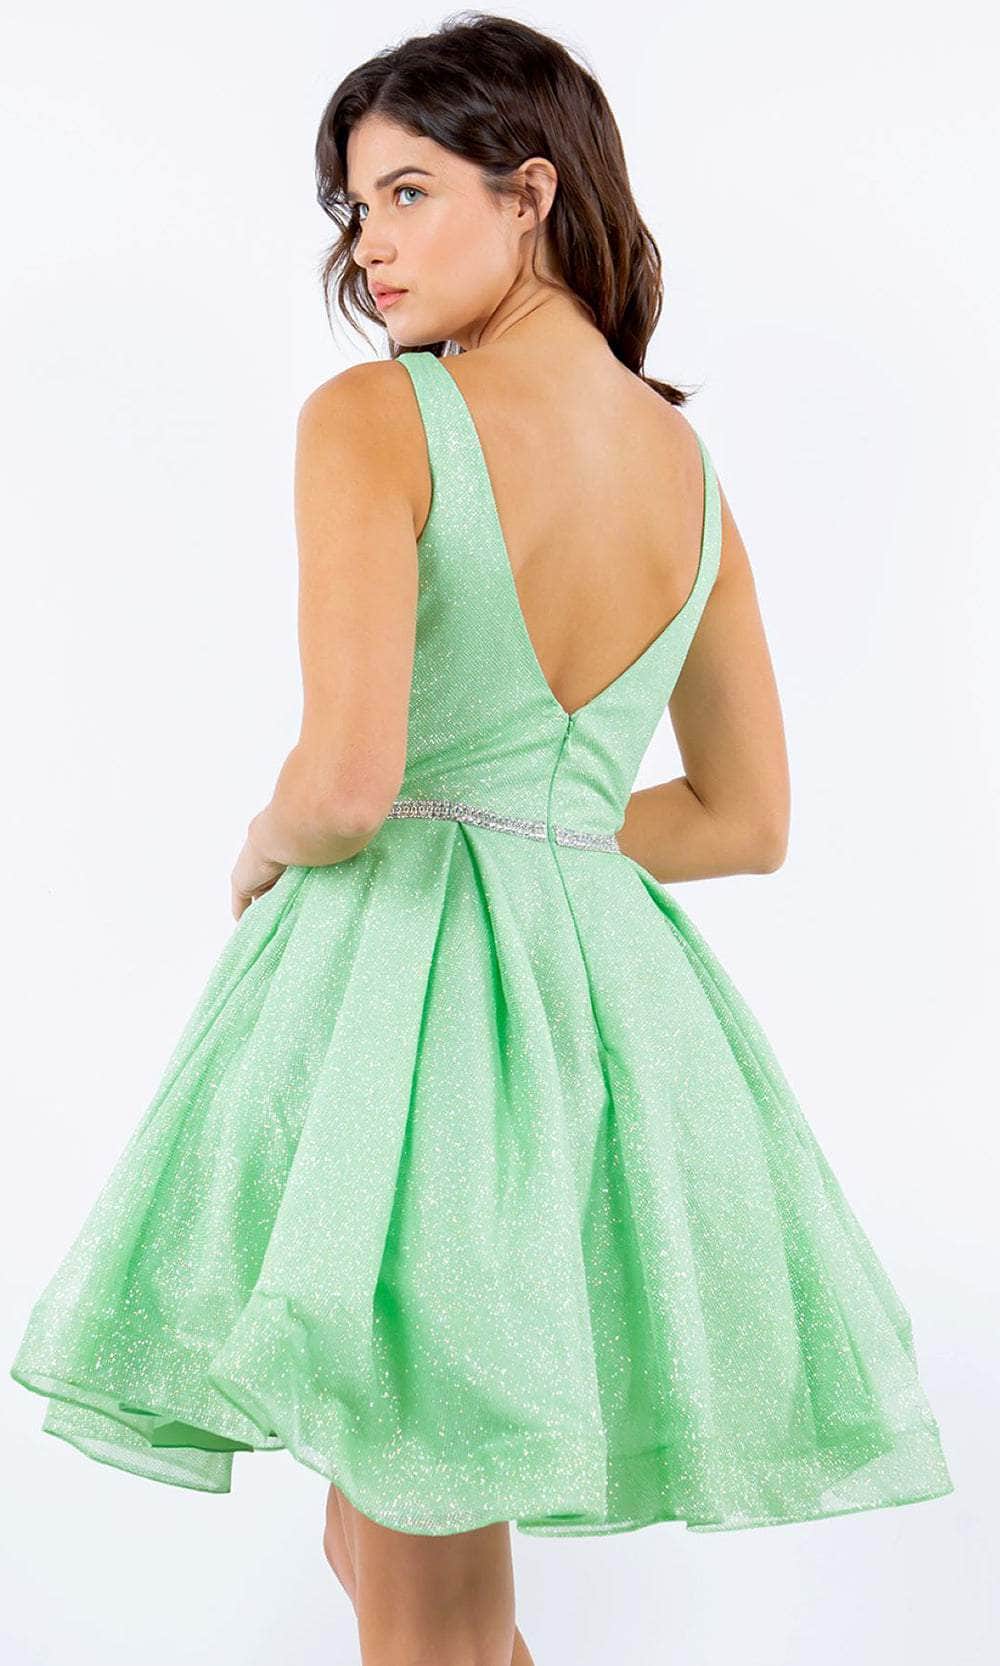 Cinderella Couture 8047J - V-Neck Glitter Mesh Cocktail Dress Special Occasion Dress